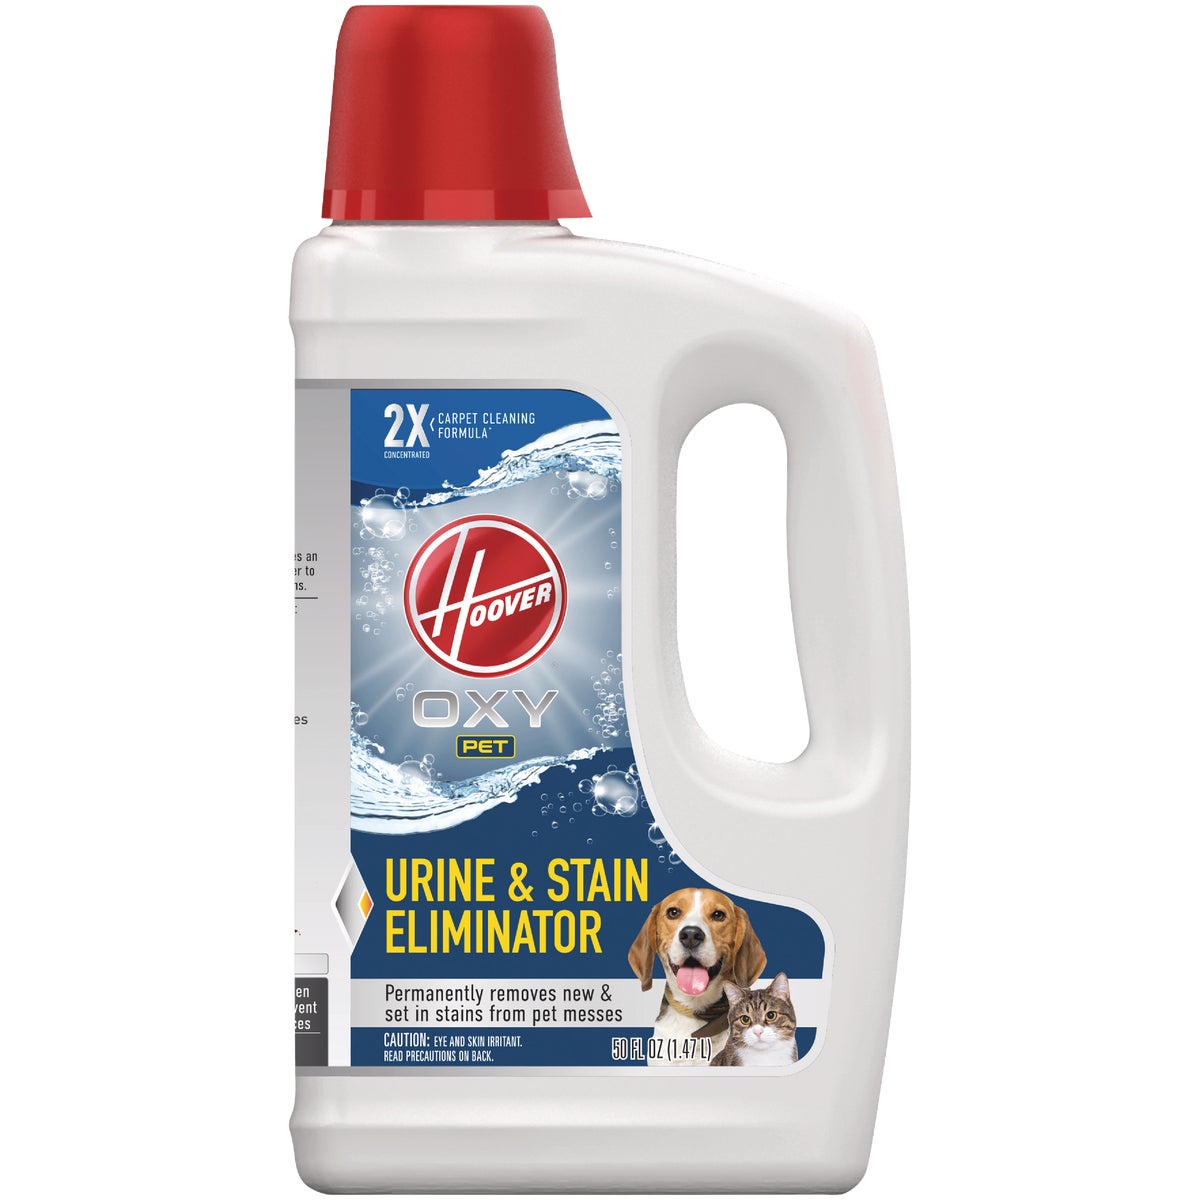 Hoover 50 Oz. Oxy Pet Urine & Stain Eliminator Carpet Cleaner